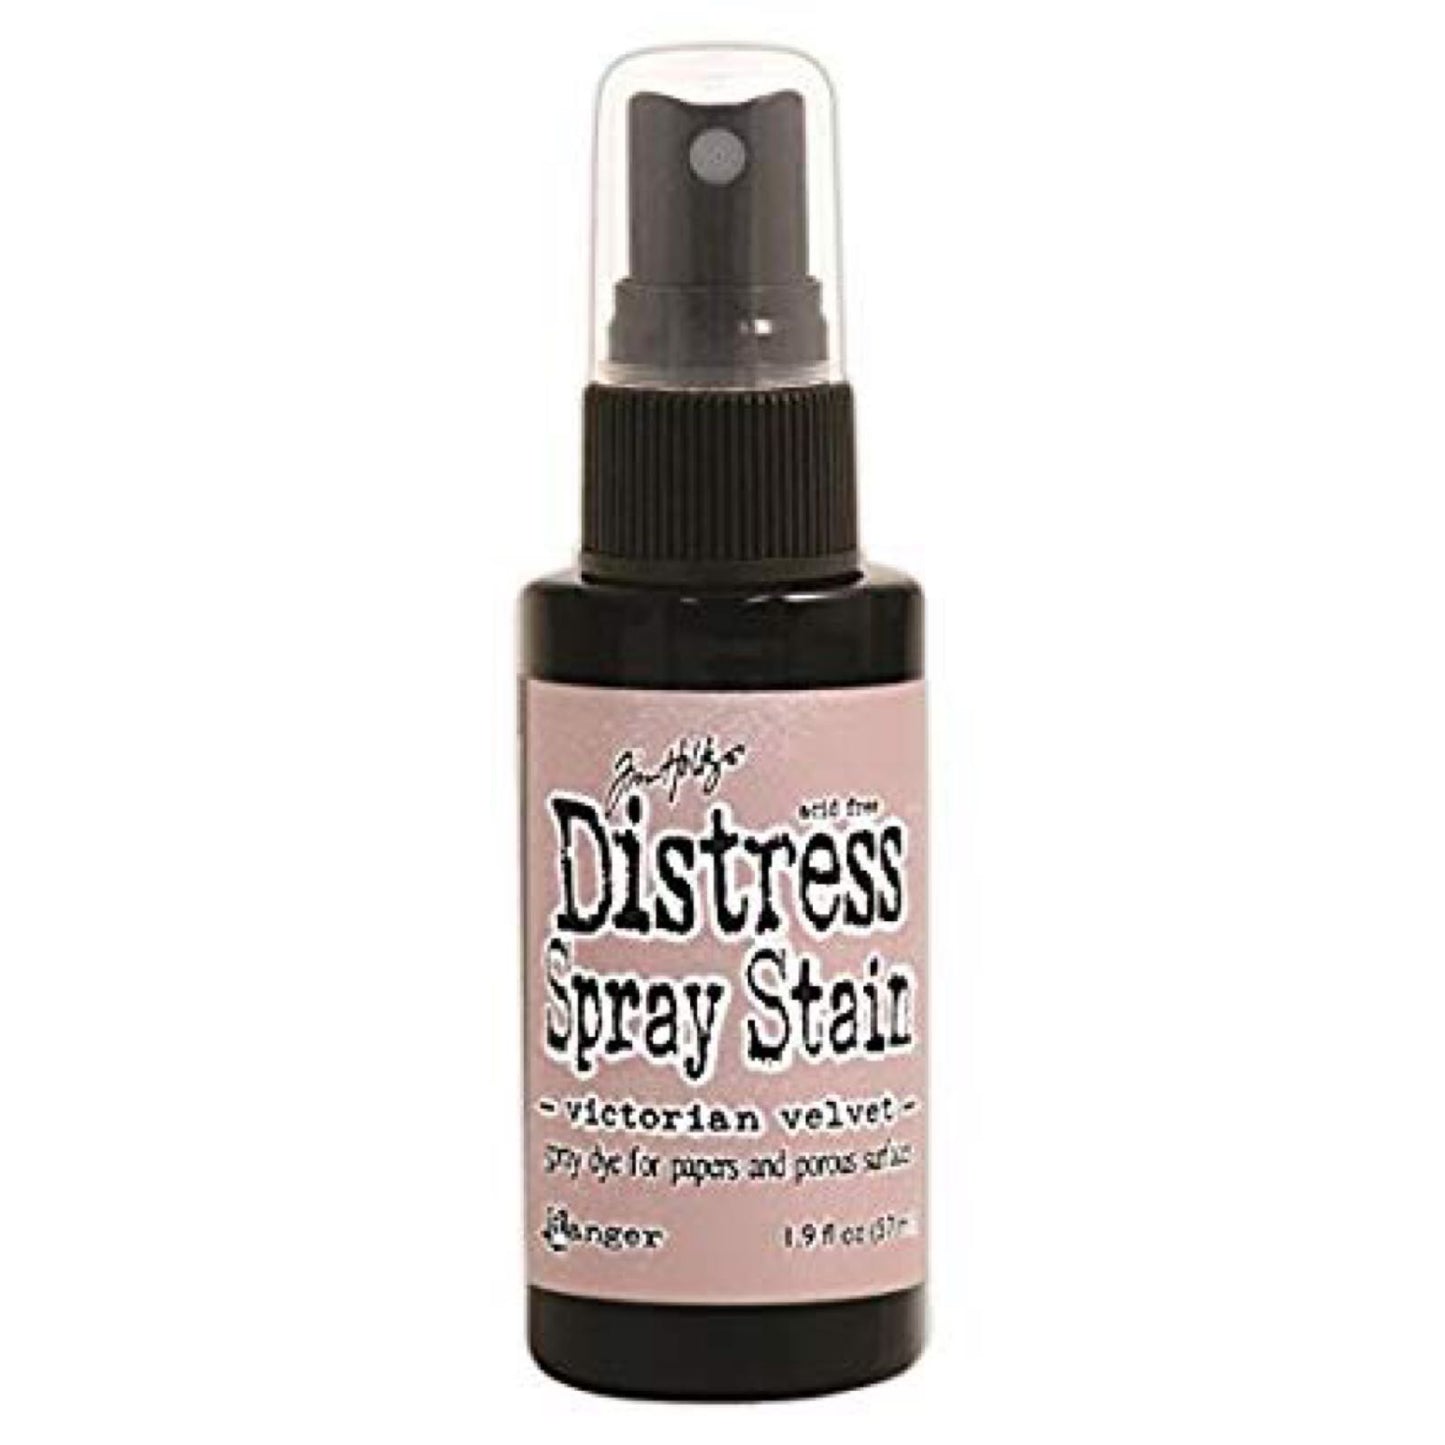 Distress spray stain Victorian velvet